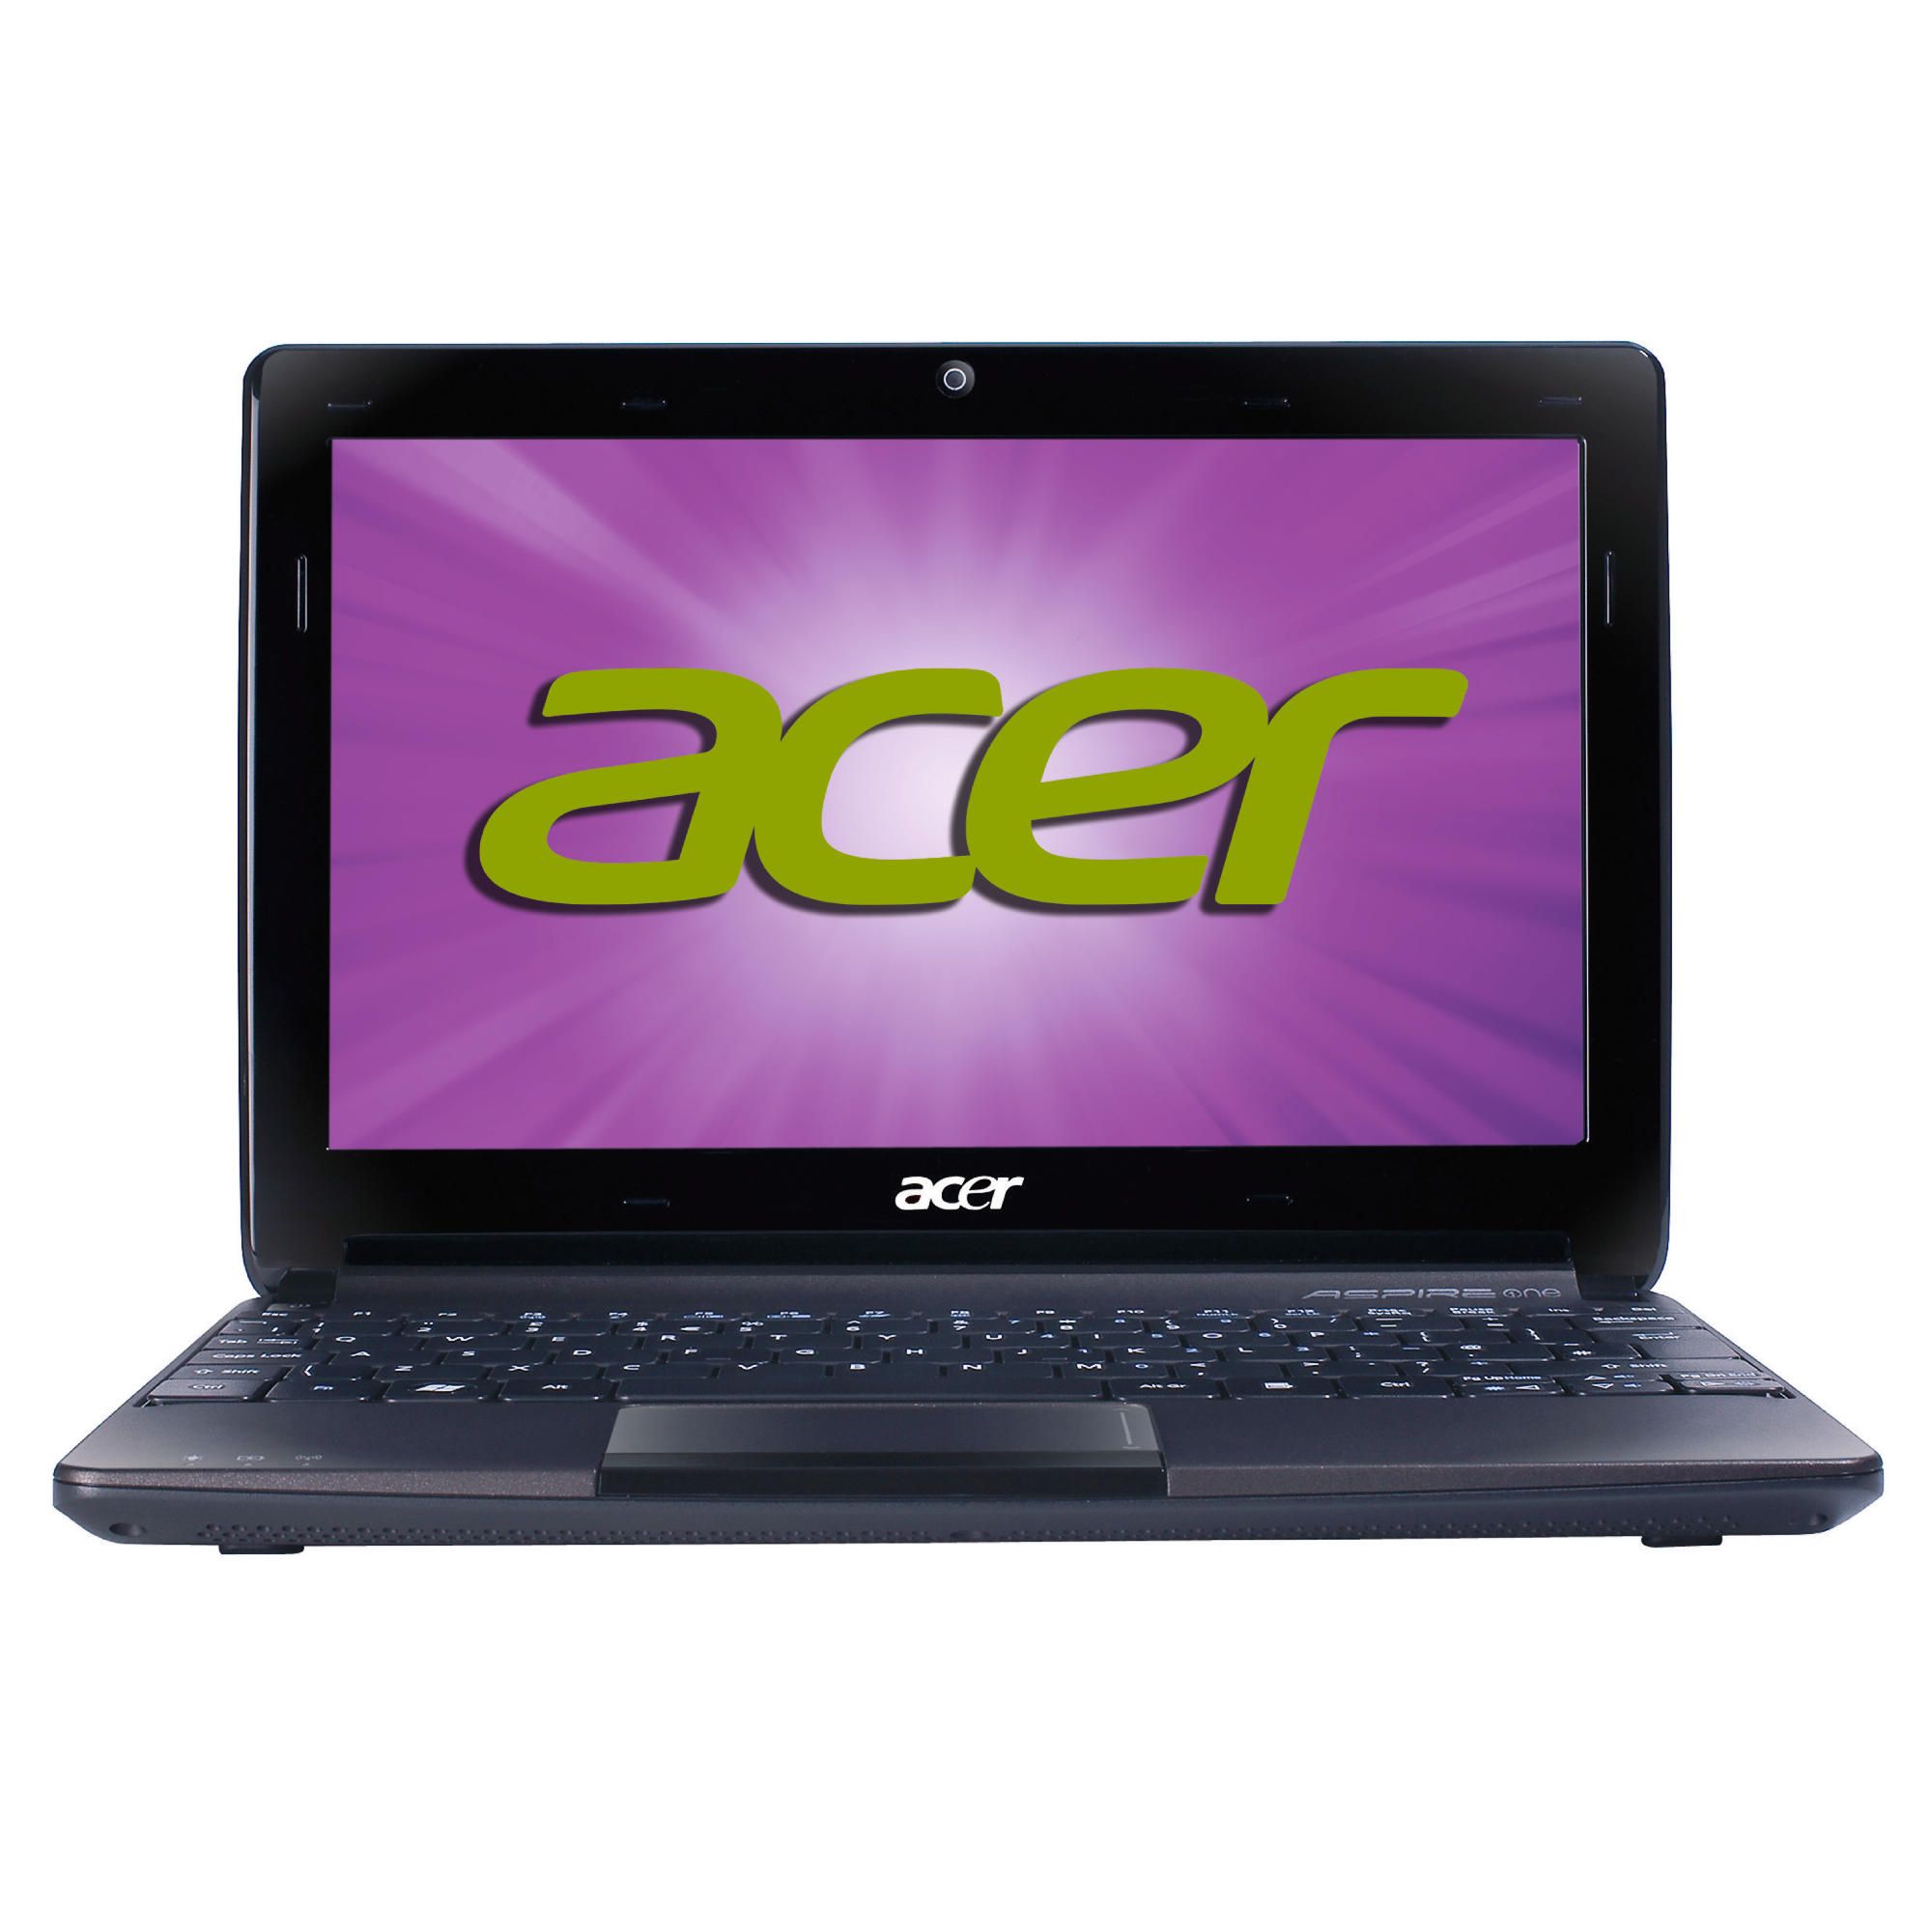 Acer Aspire One D257 Netbook (Intel Atom, 1GB, 250GB, 10.1'' Display) Black at Tesco Direct